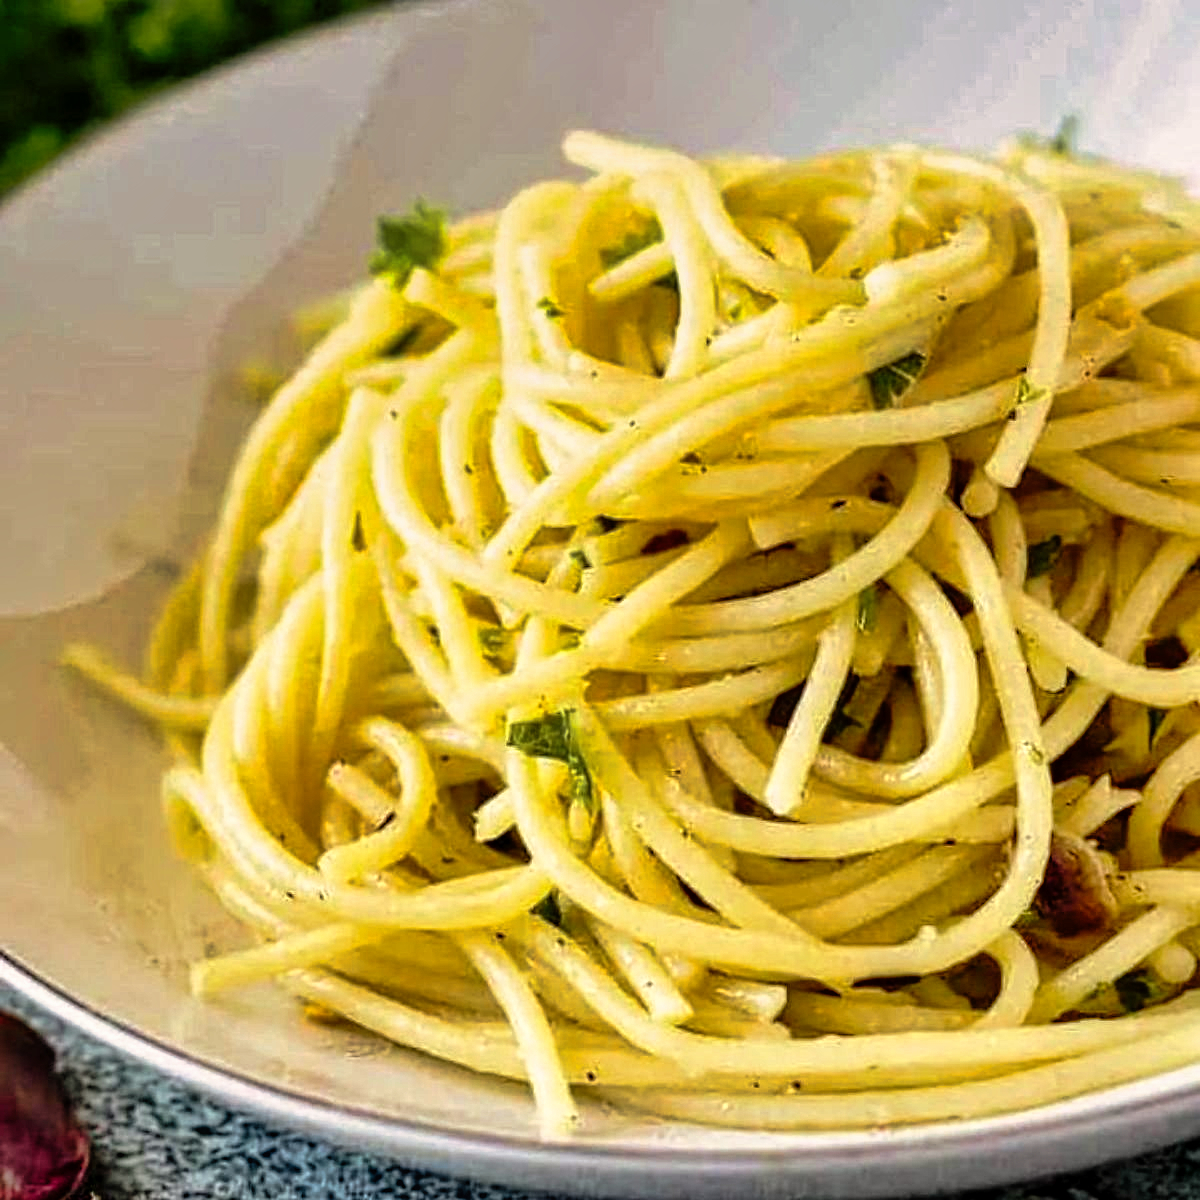 recipe with roasted garlic - 9. Roasted Garlic and Olive Oil Spaghetti